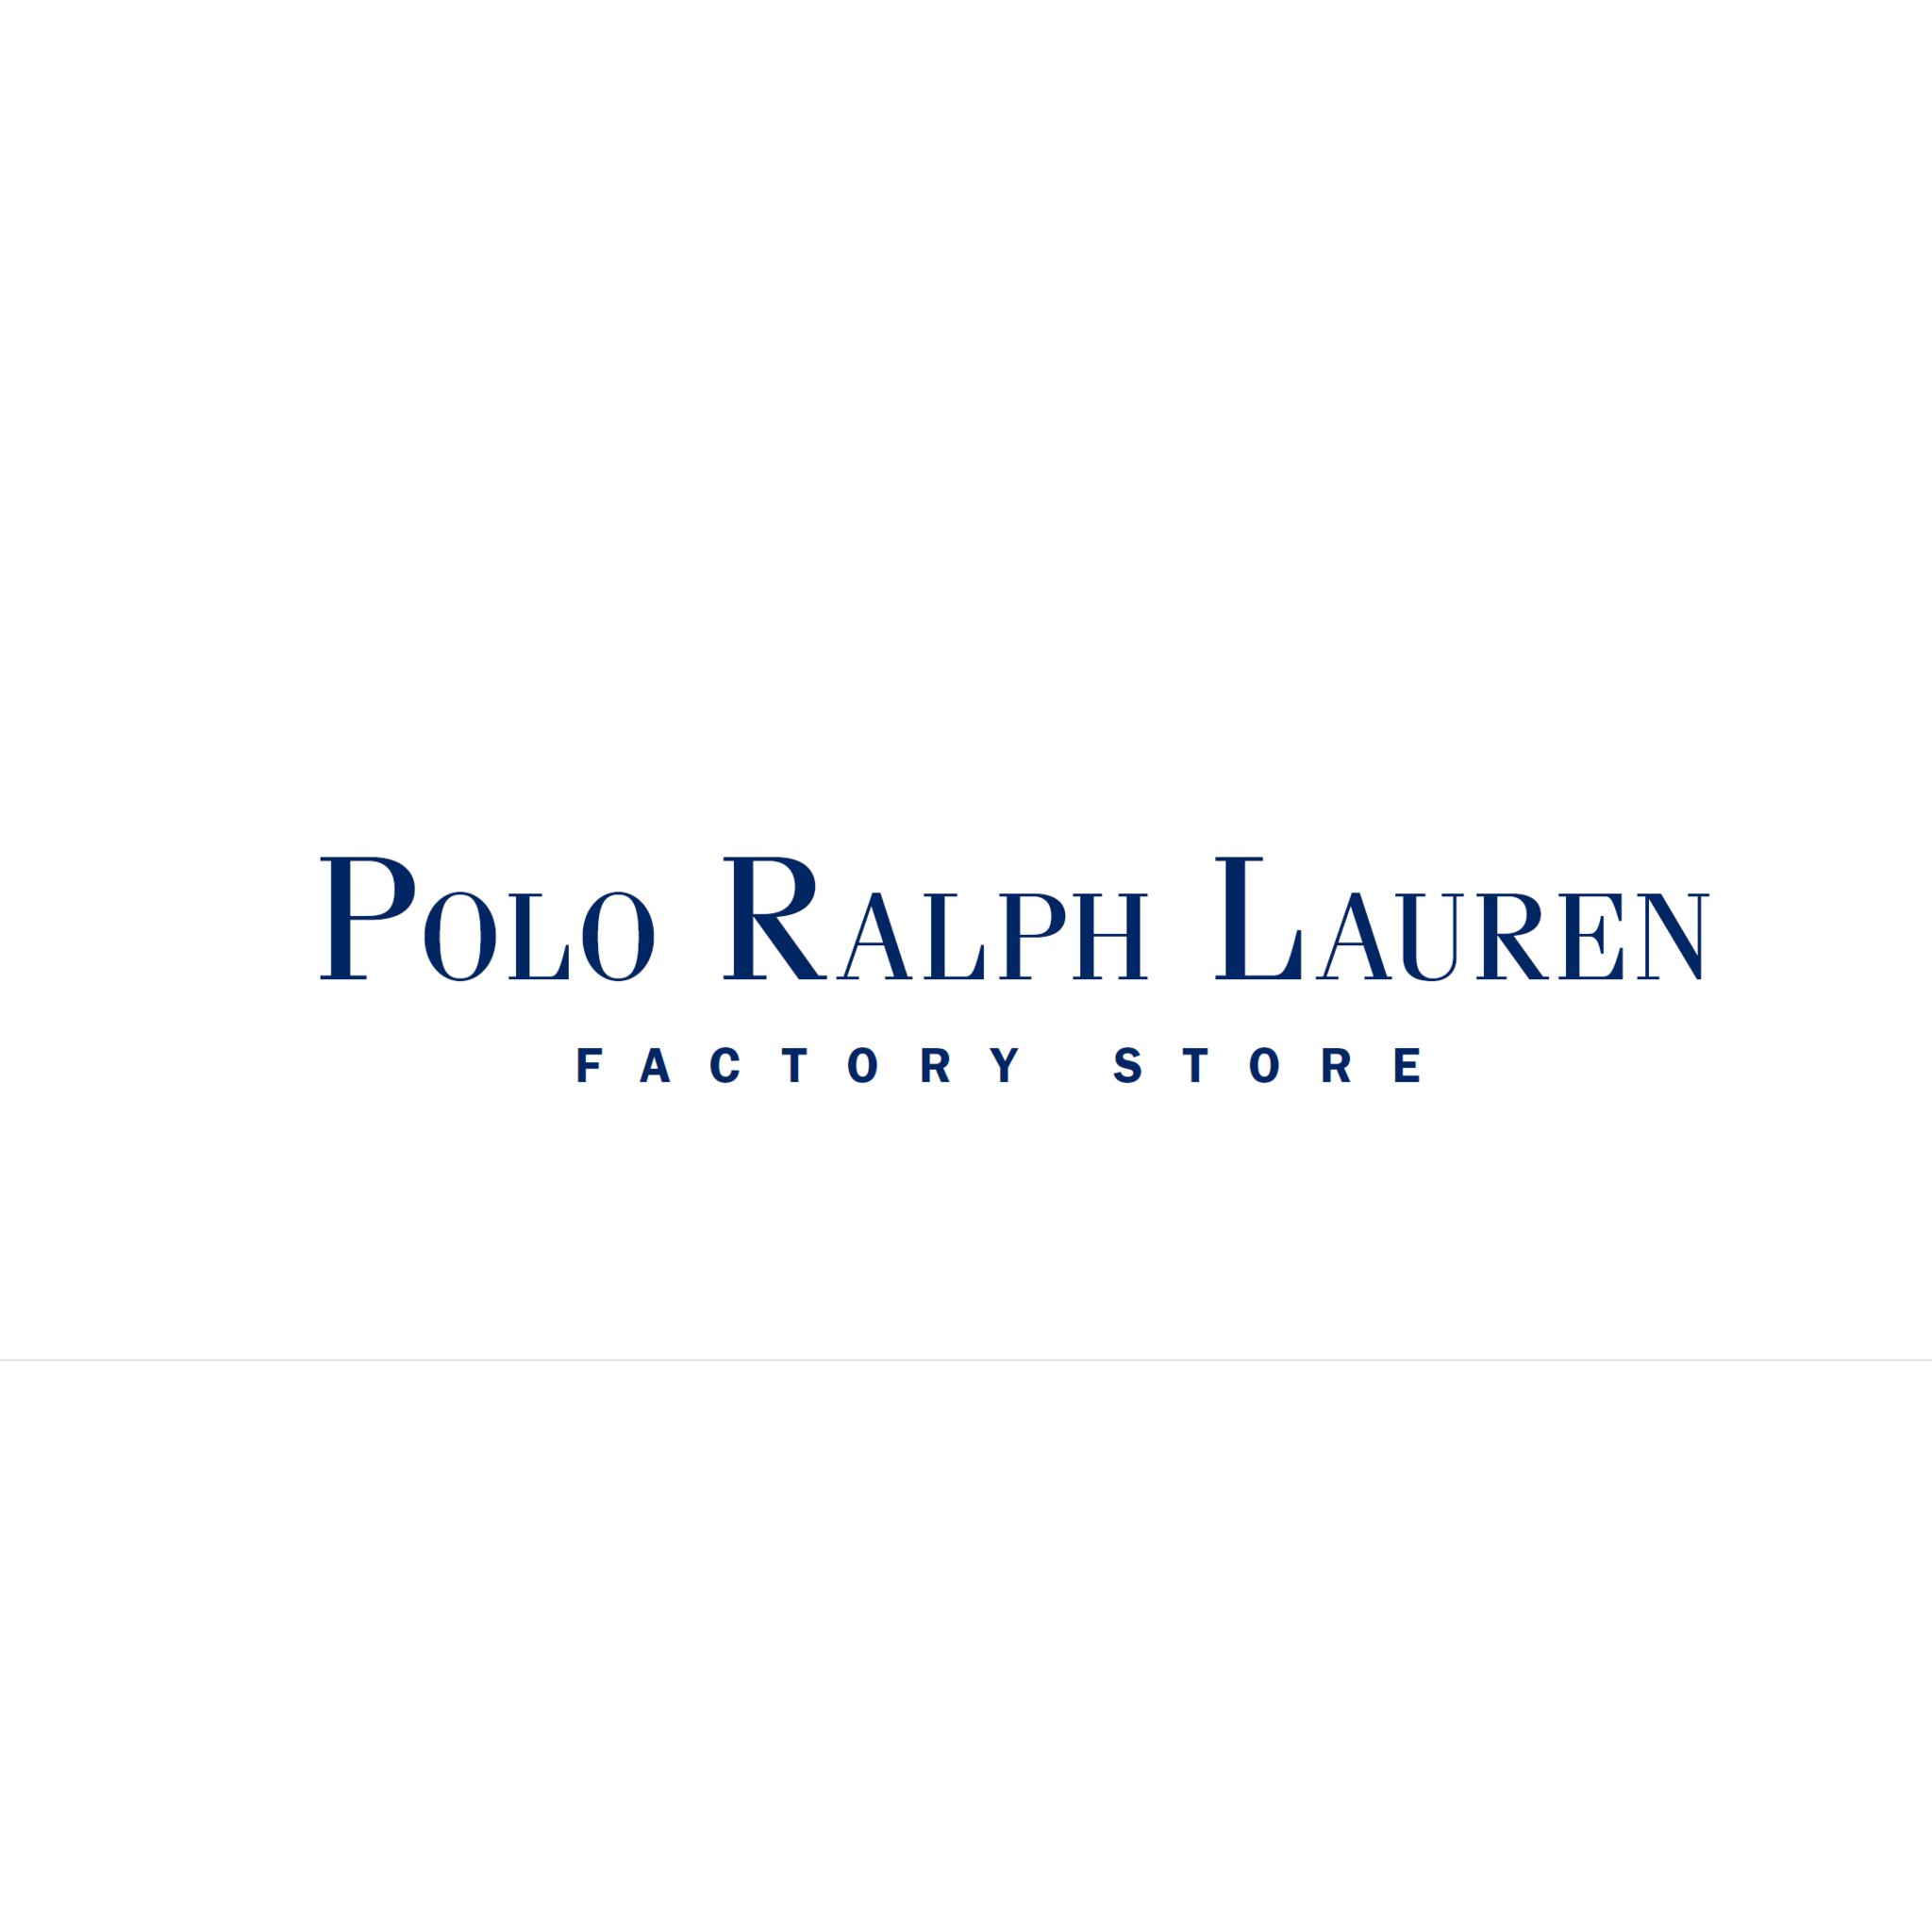 Polo Ralph Lauren Factory Store - Children's Clothing Stores